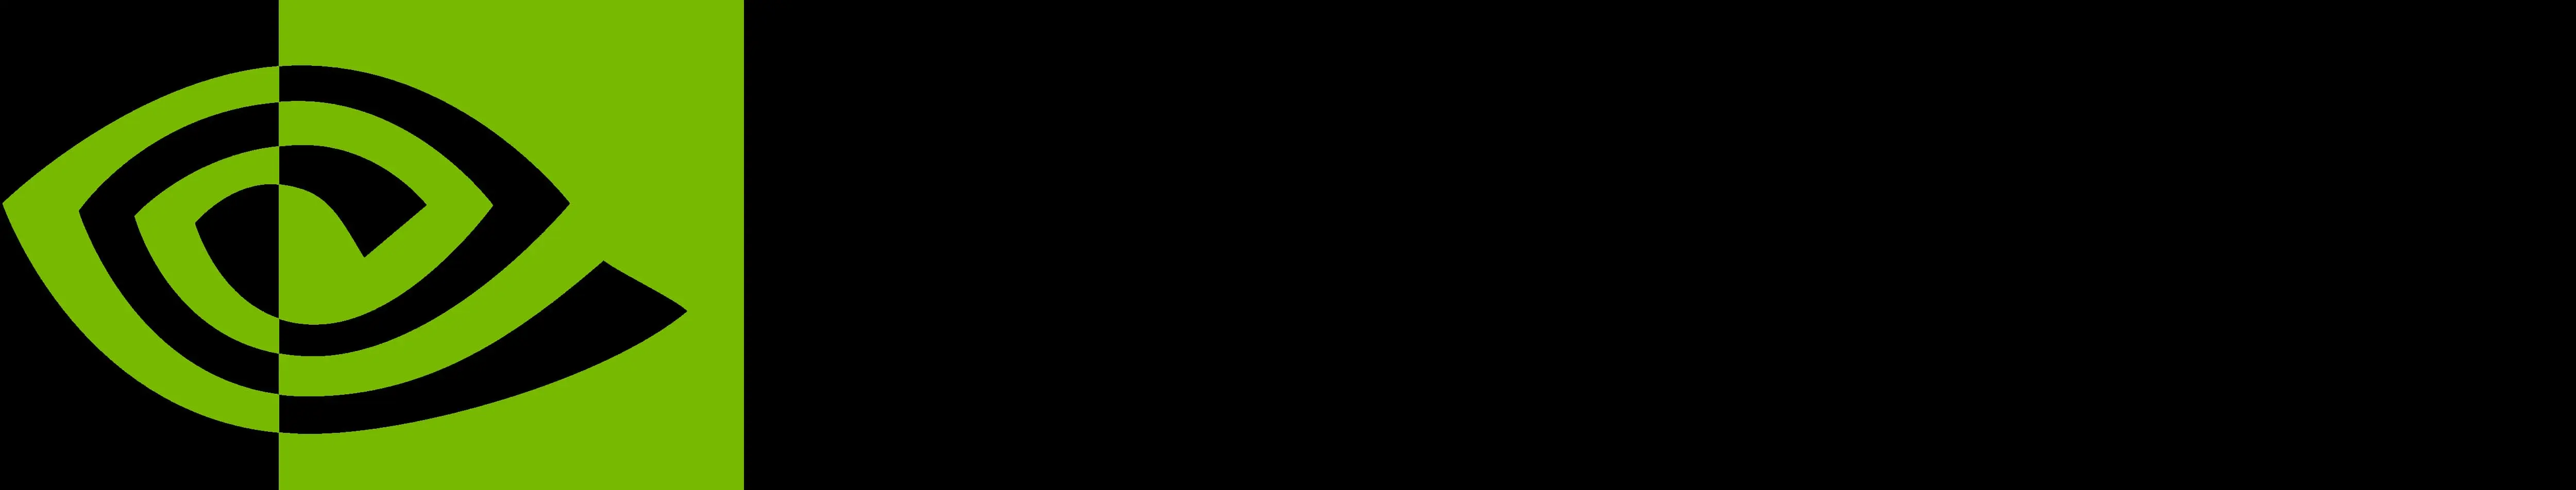 NVIDIA Academic Grants Program Logo